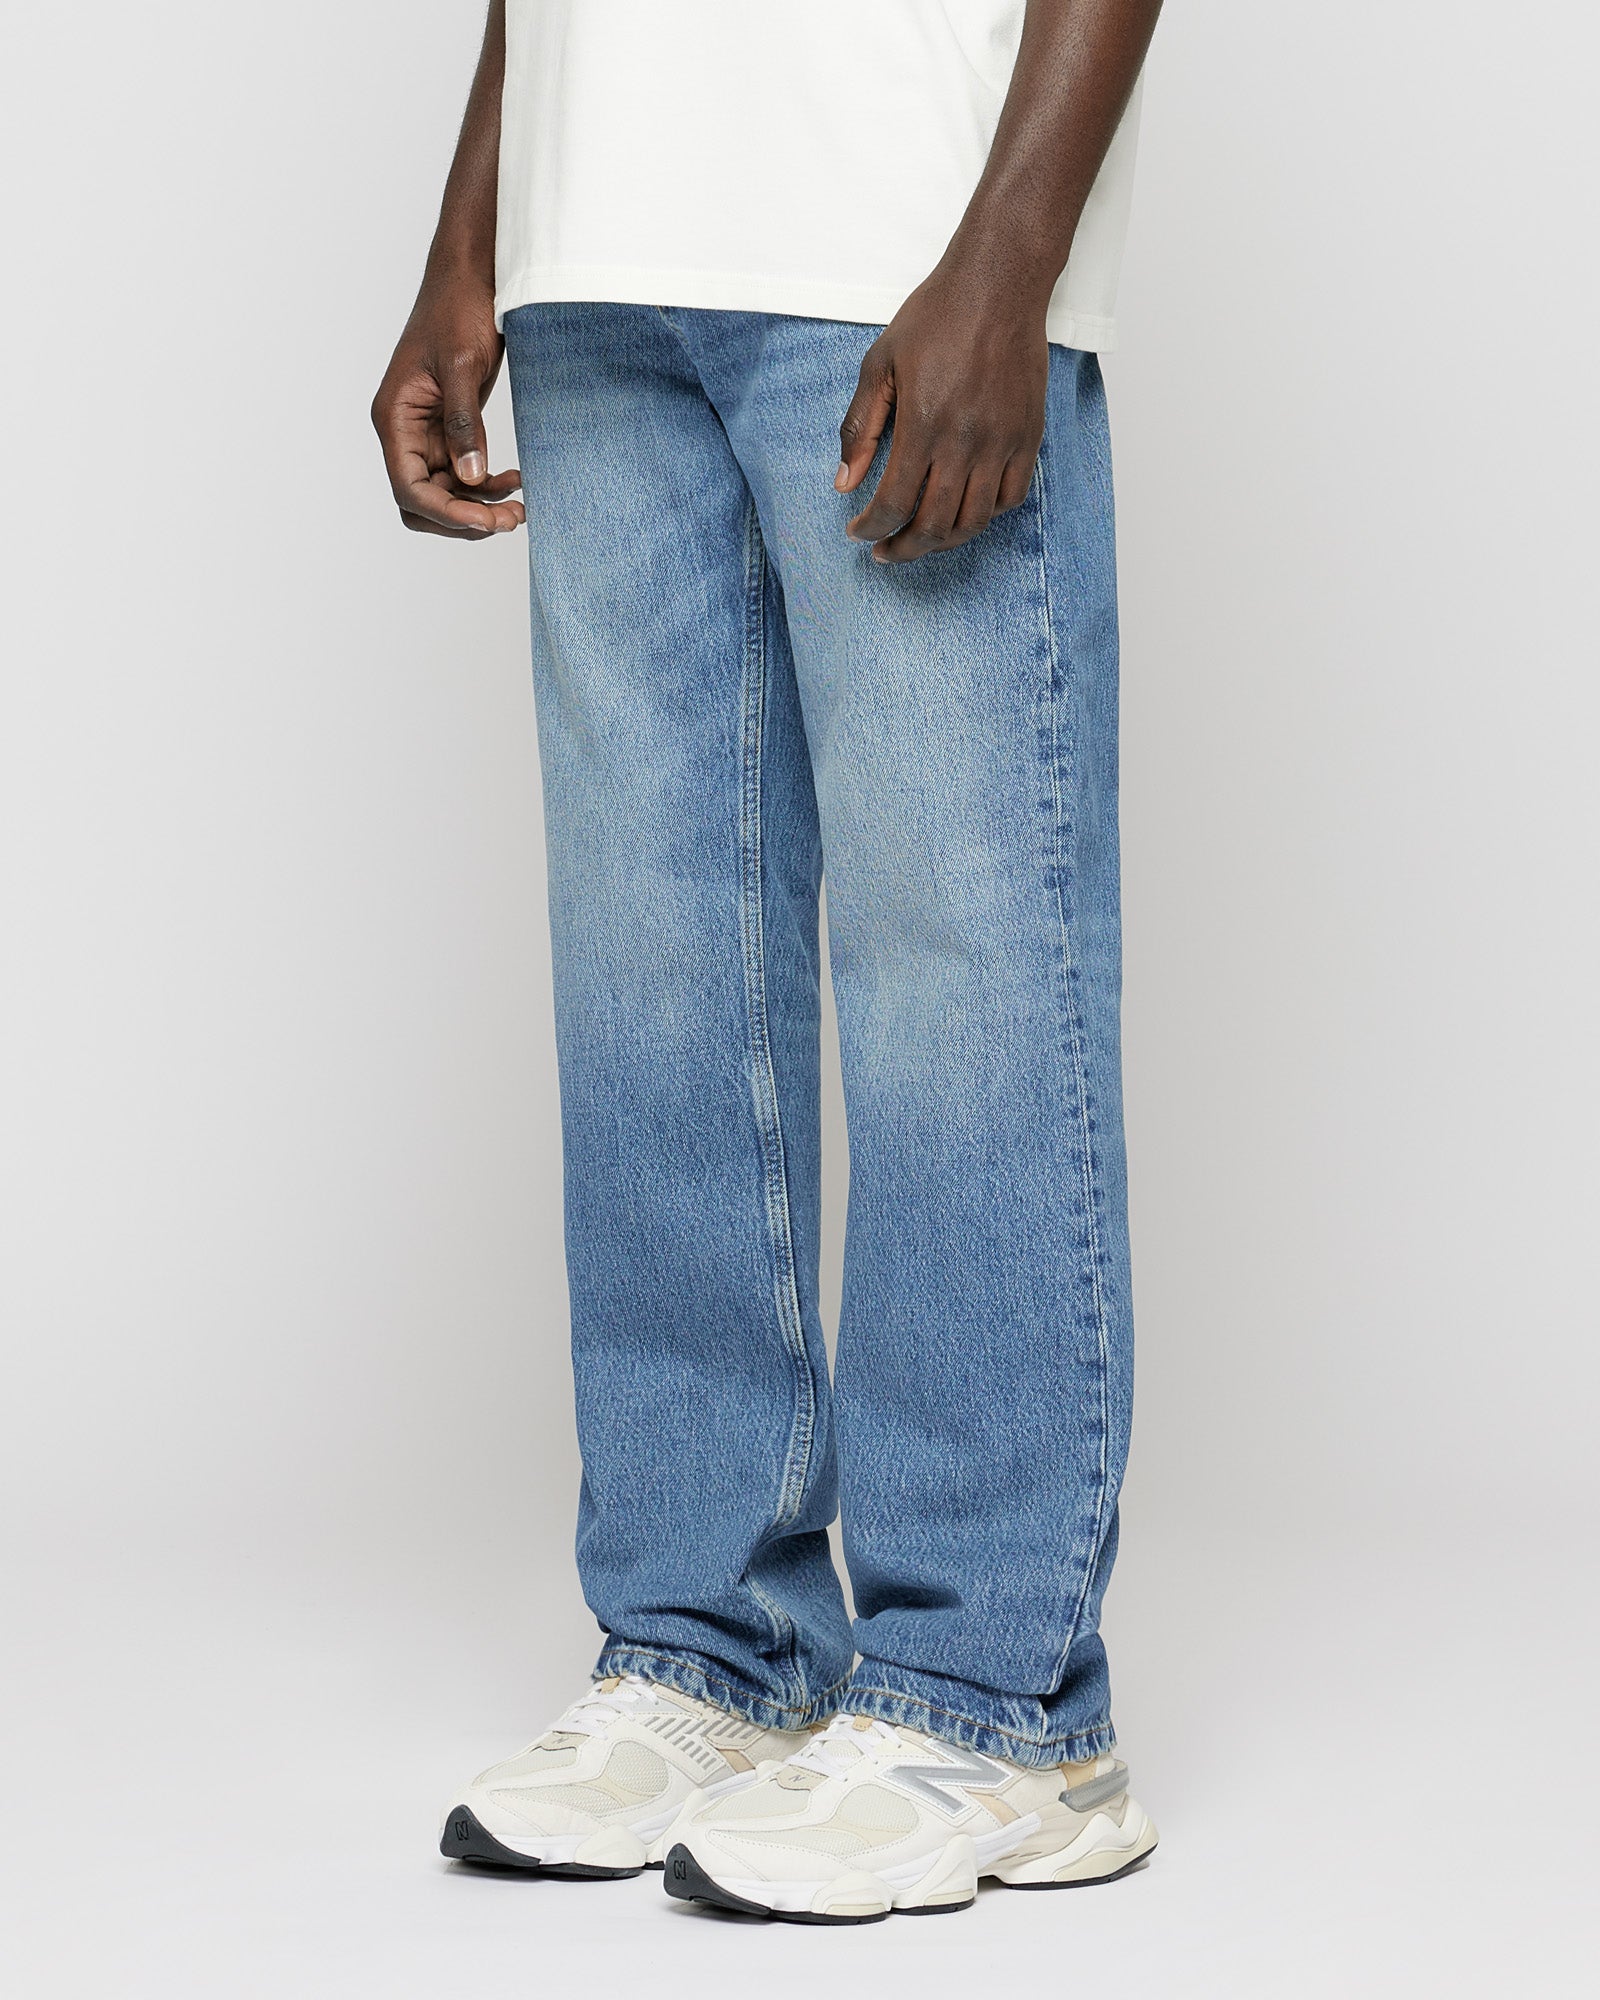 Distressed Basic Jeans